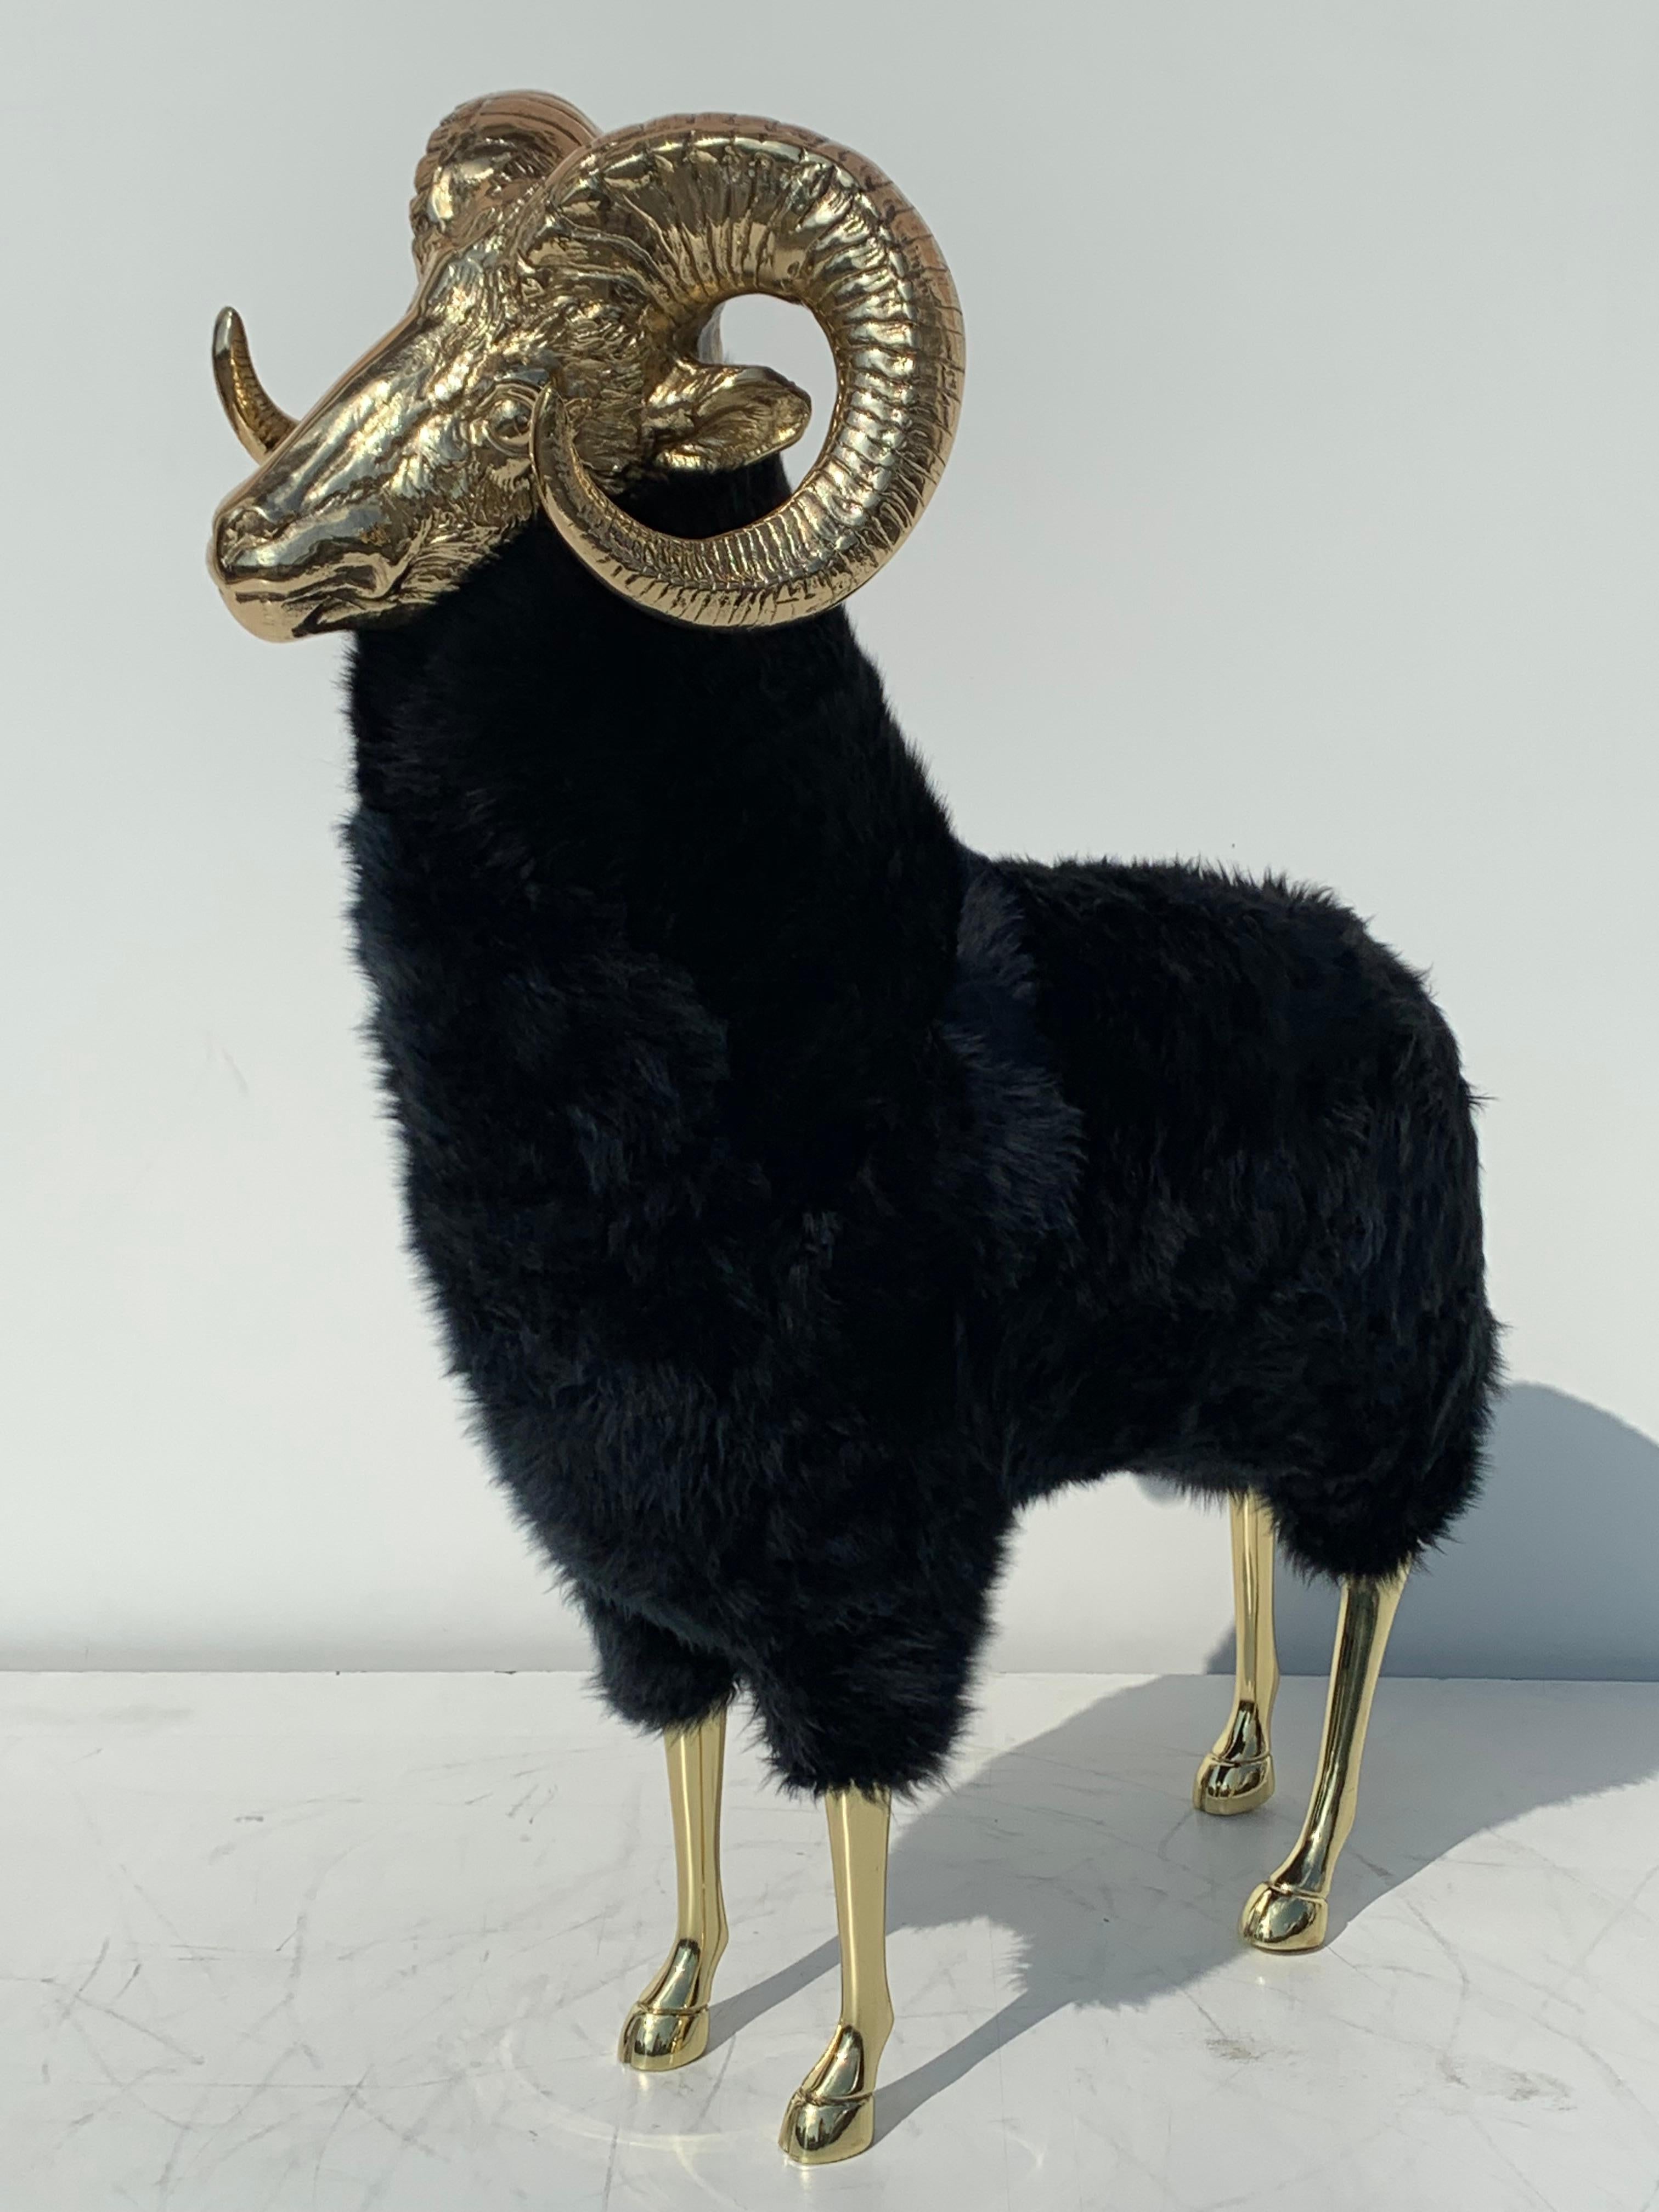 American Brass Mountain Sheep or Ram Sculpture in Black Fur